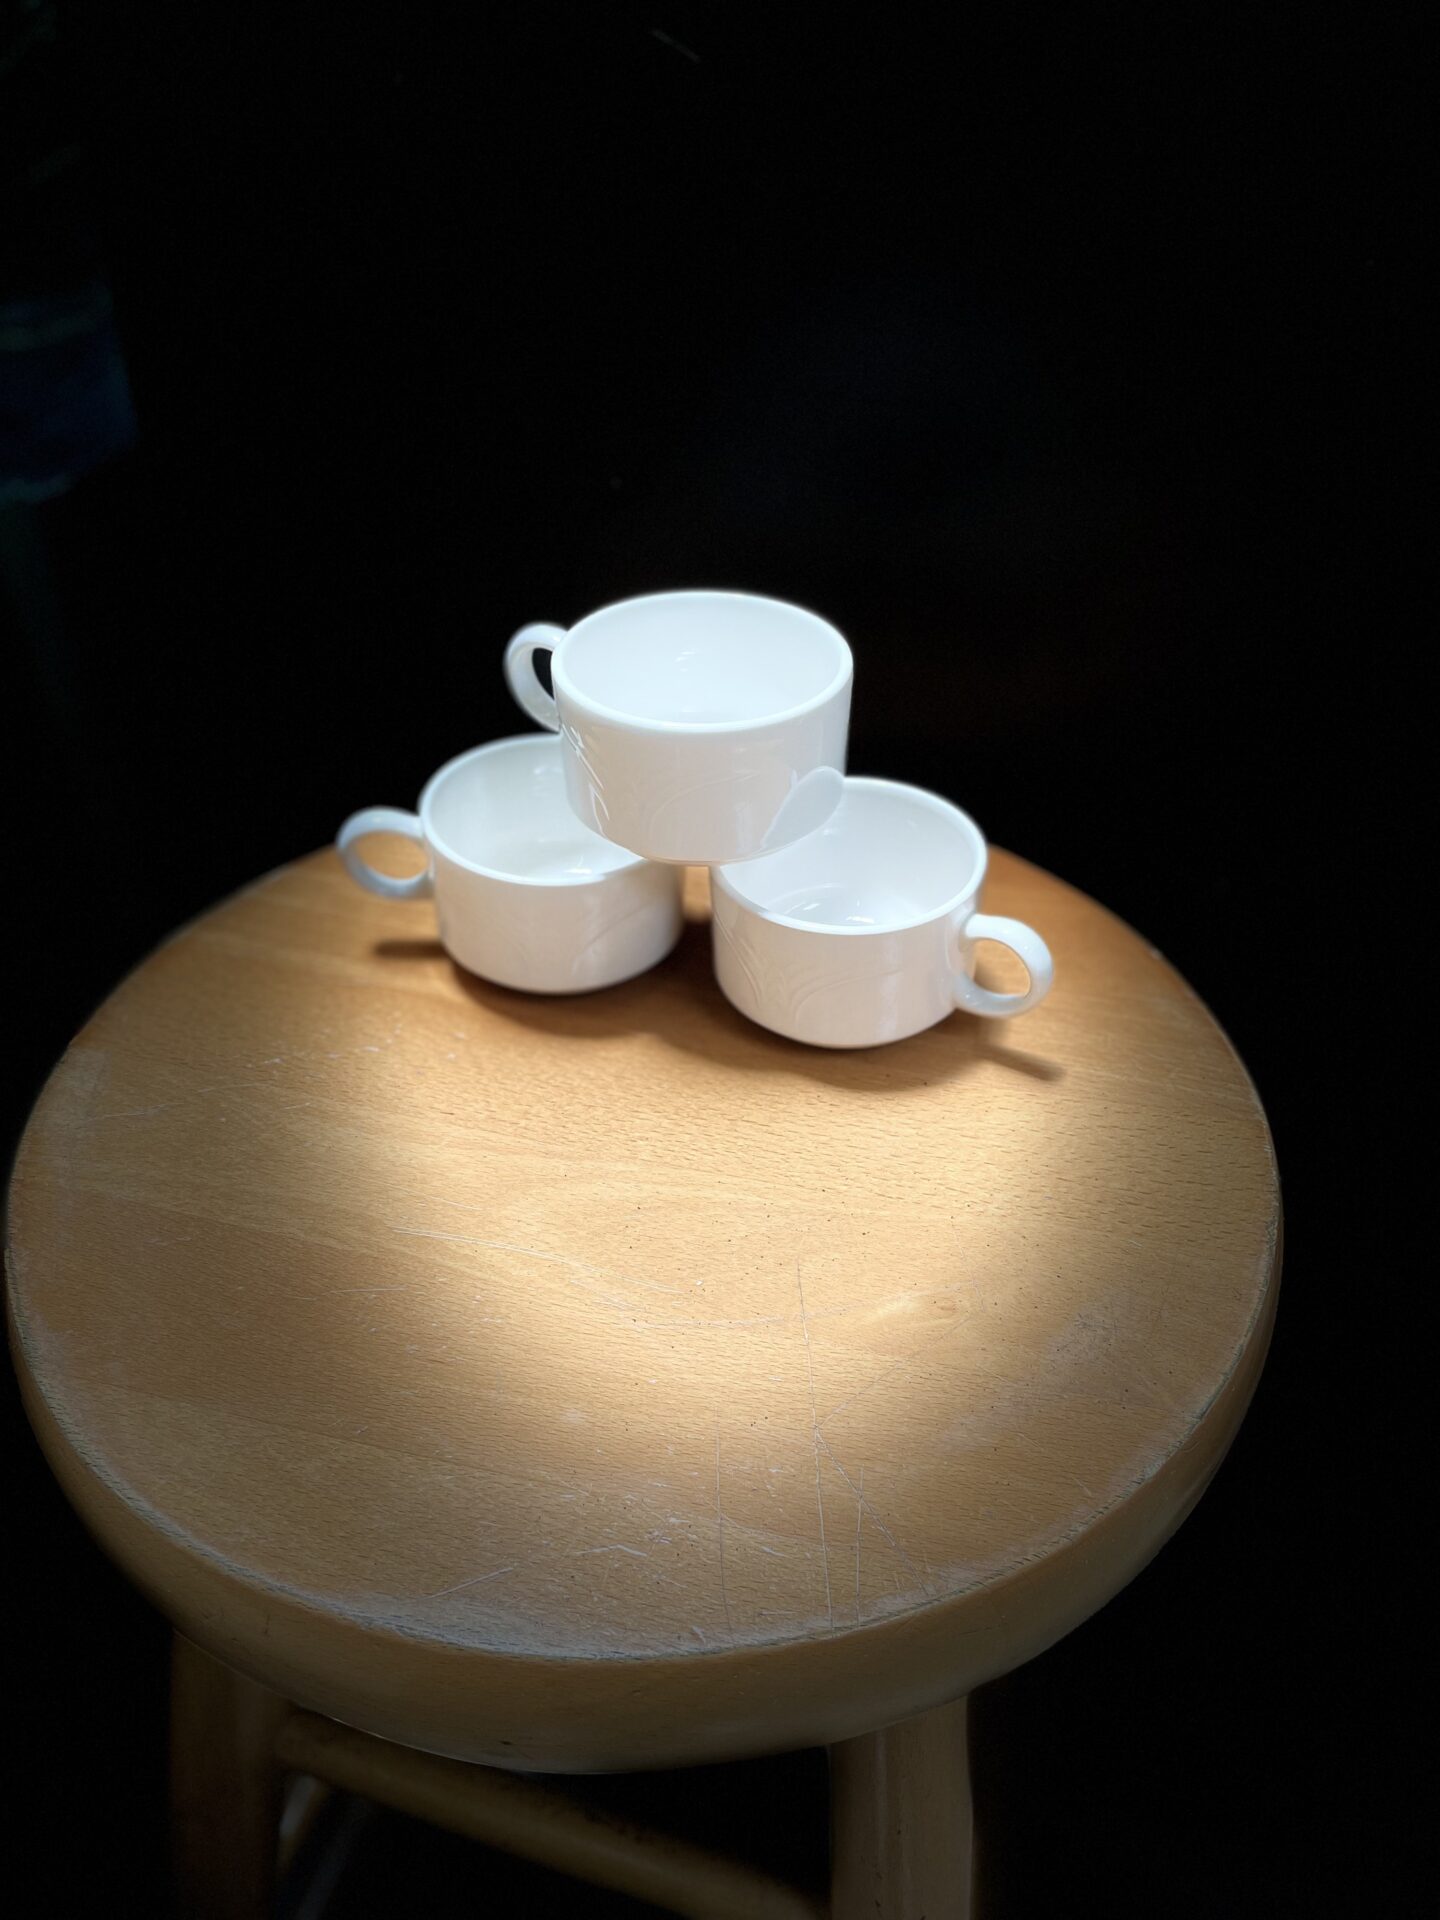 Three white cups